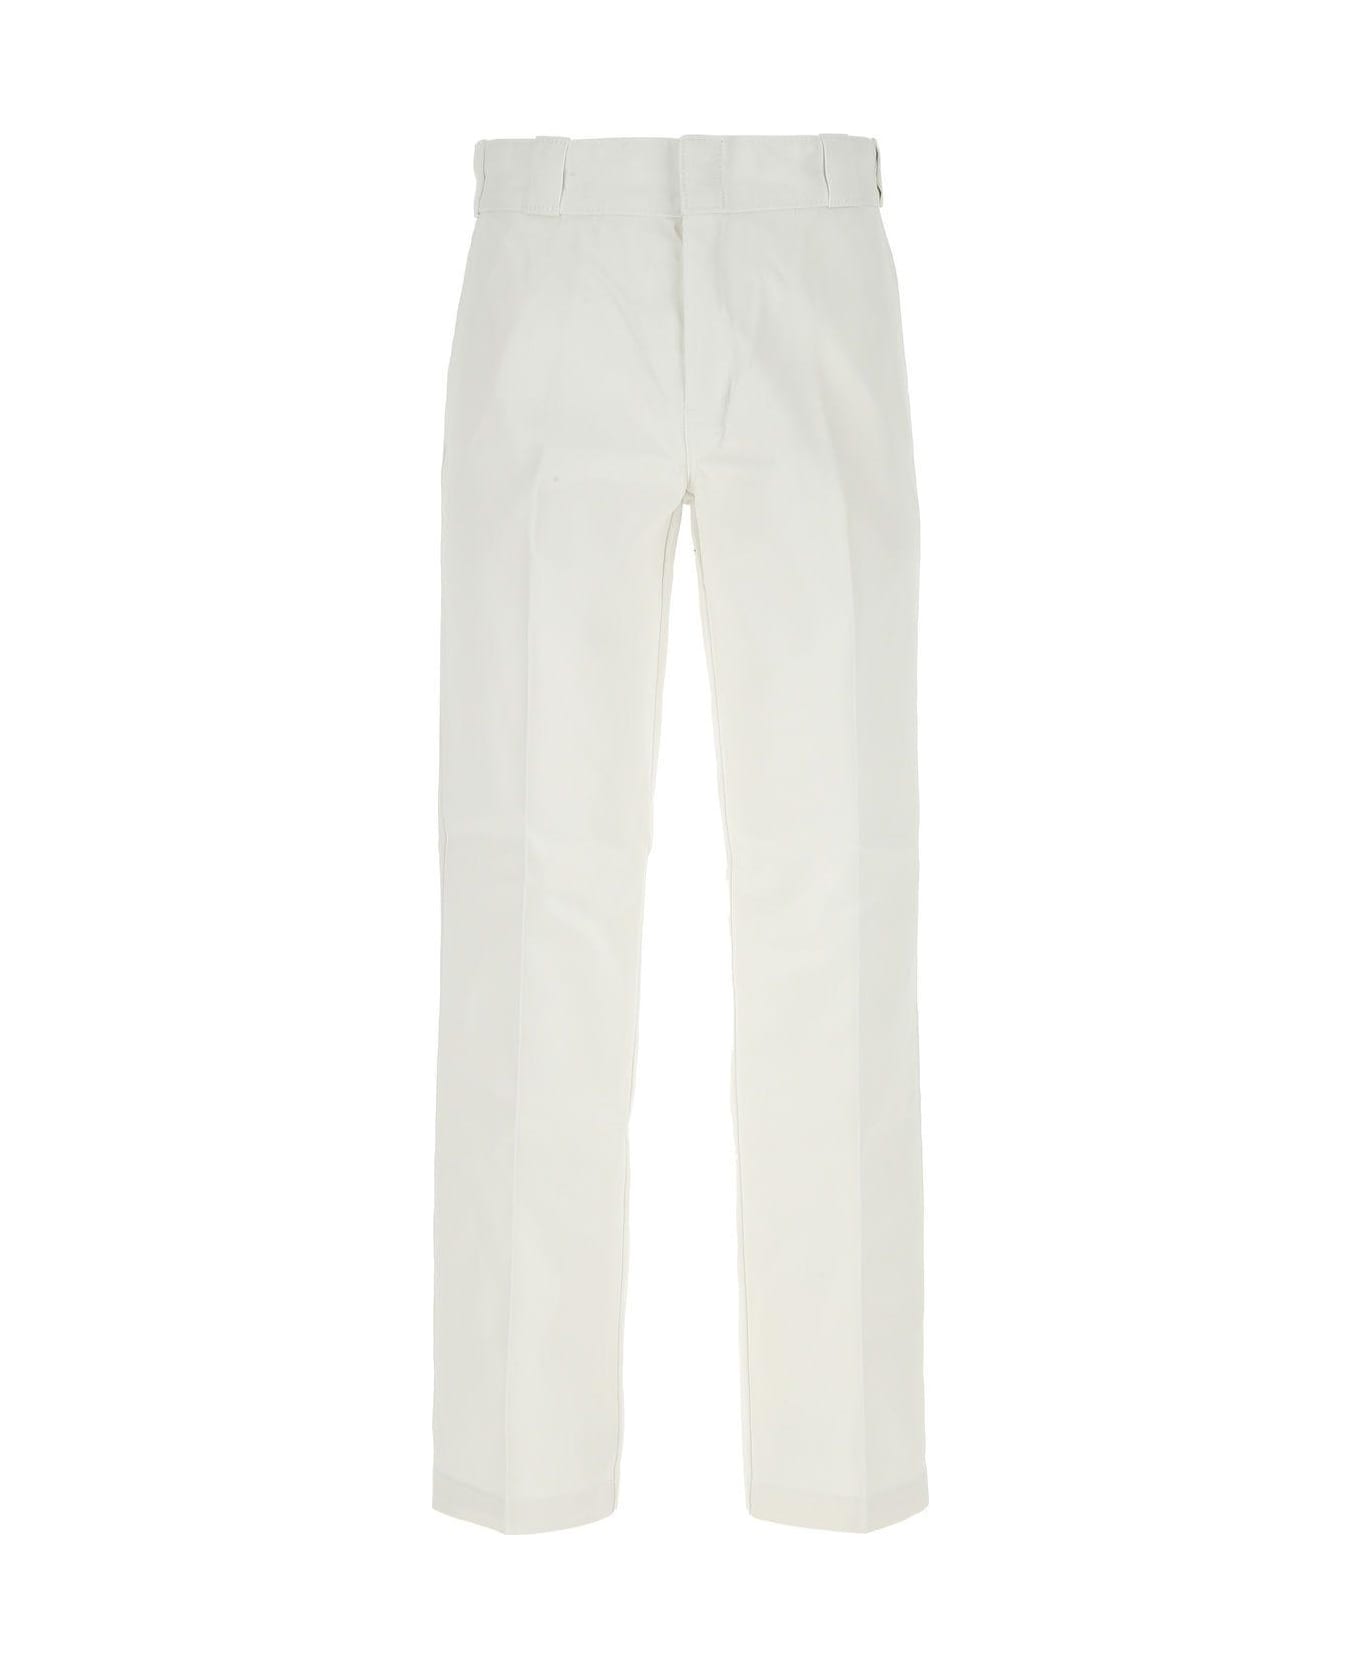 Dickies White Polyester Blend Pant - WHITE